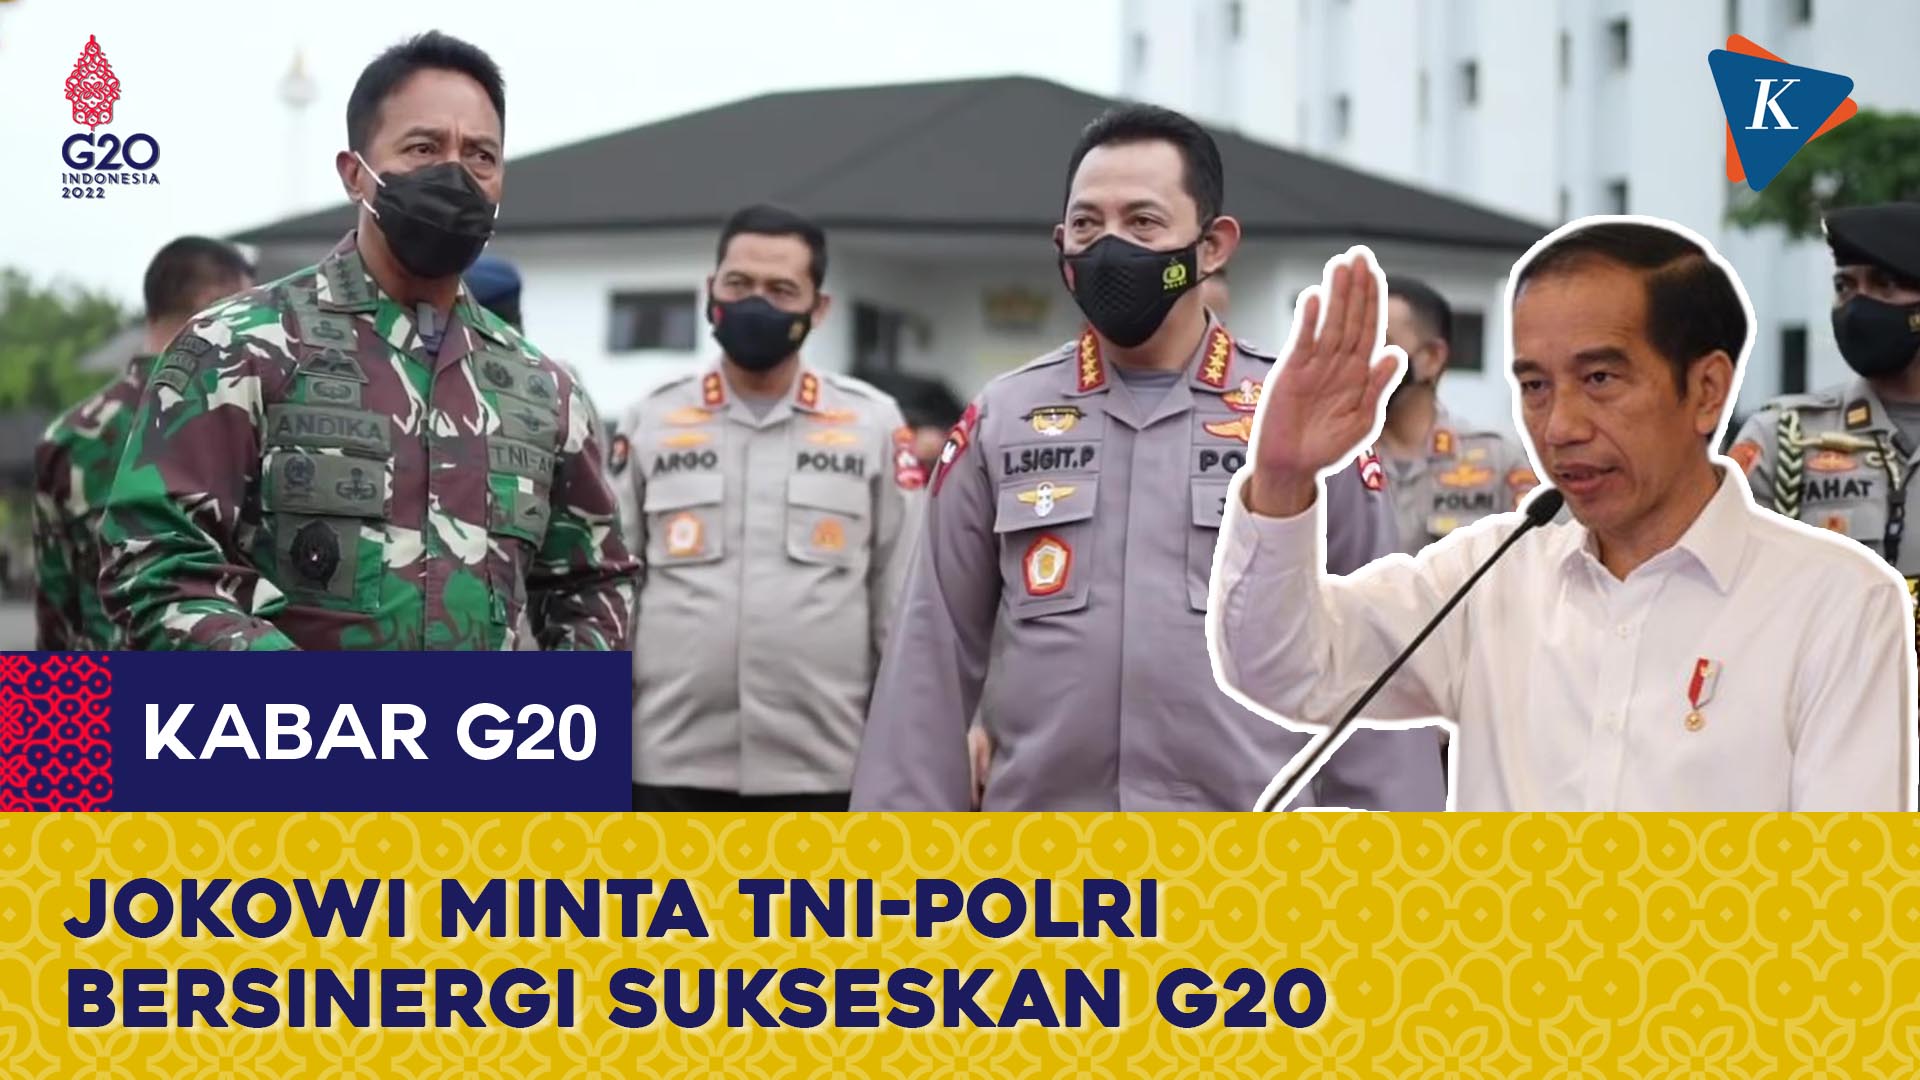 Jokowi Minta TNI-POLRI Bersinergi Sukseskan Agenda G20